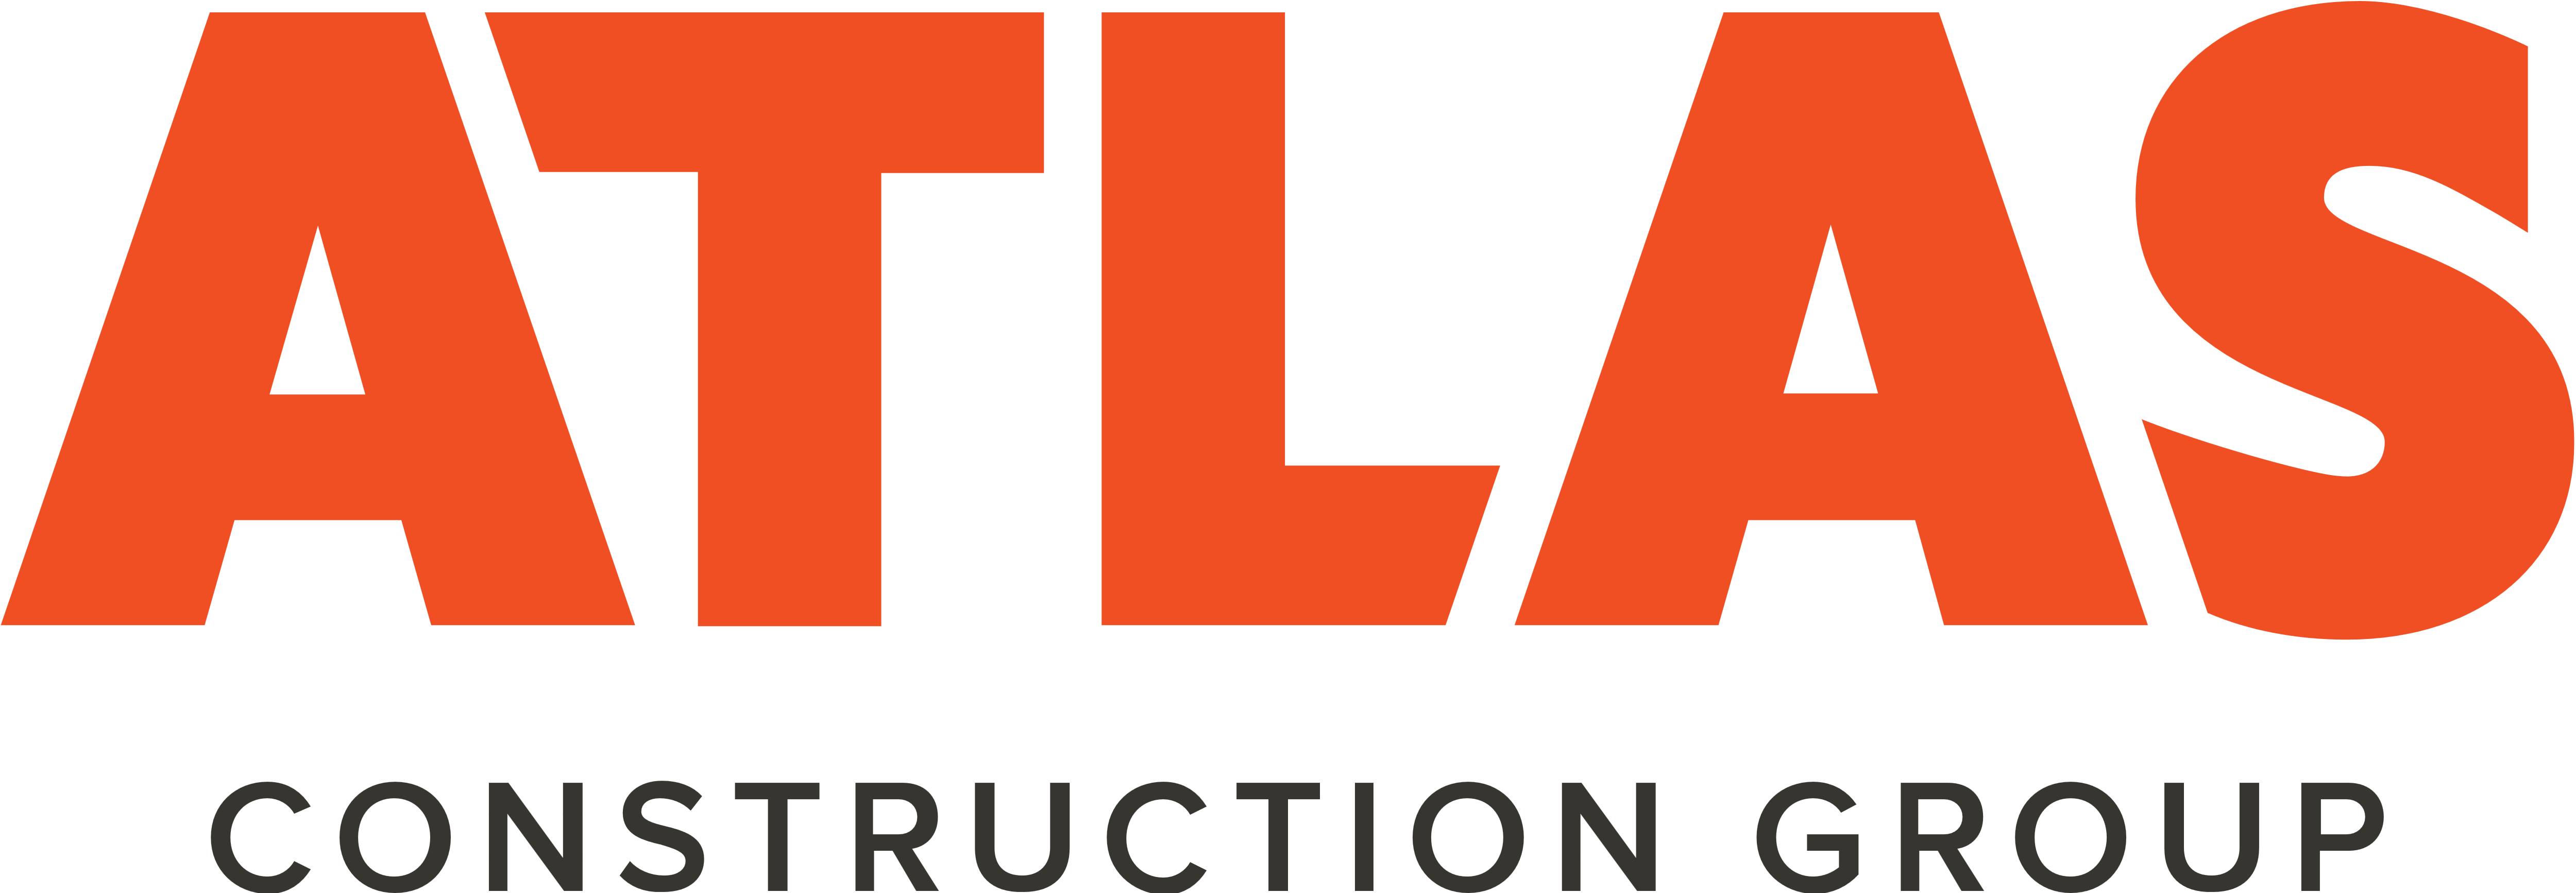 Atlas Construction Logo - Atlas Construction Group (5000x1733), Png Download